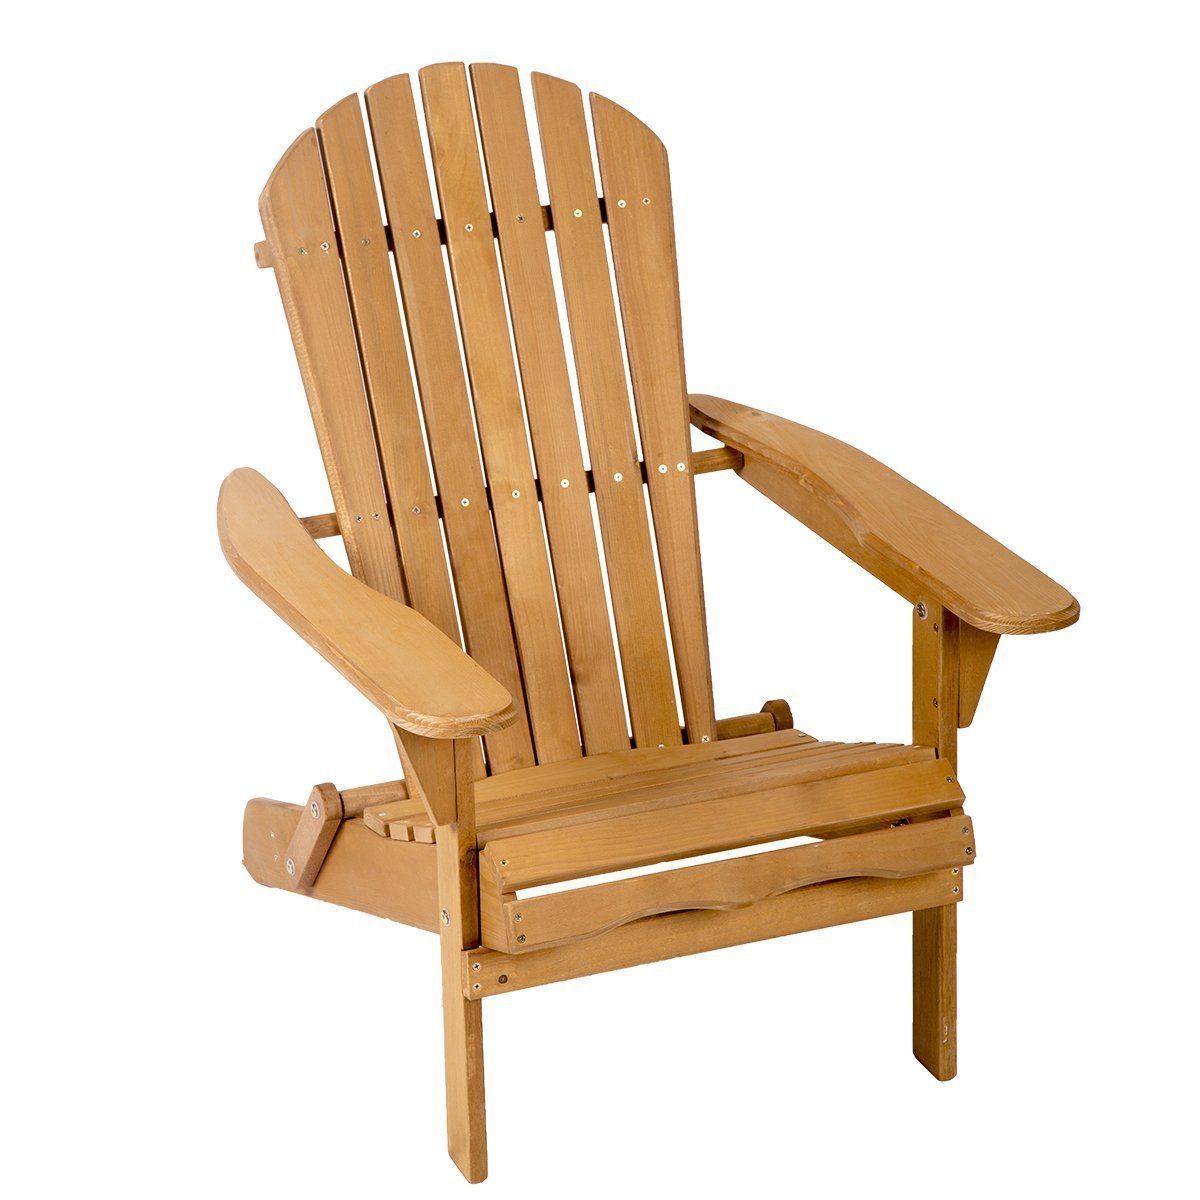 2019 New Outdoor Wood Adirondack Chair Garden Furniture 